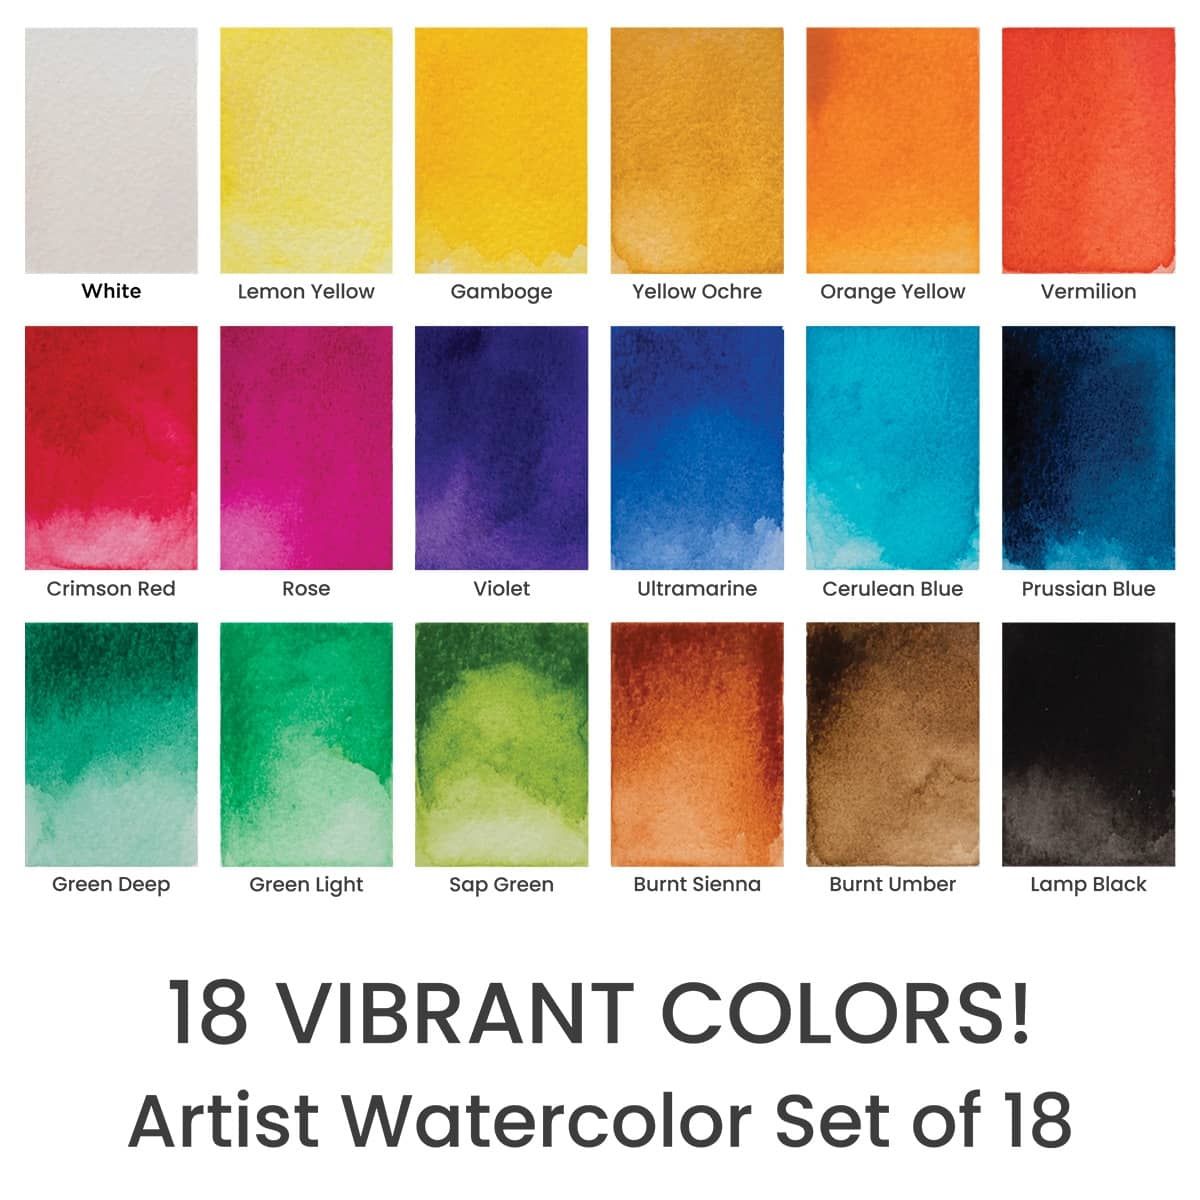 18 Vibrant Colors!